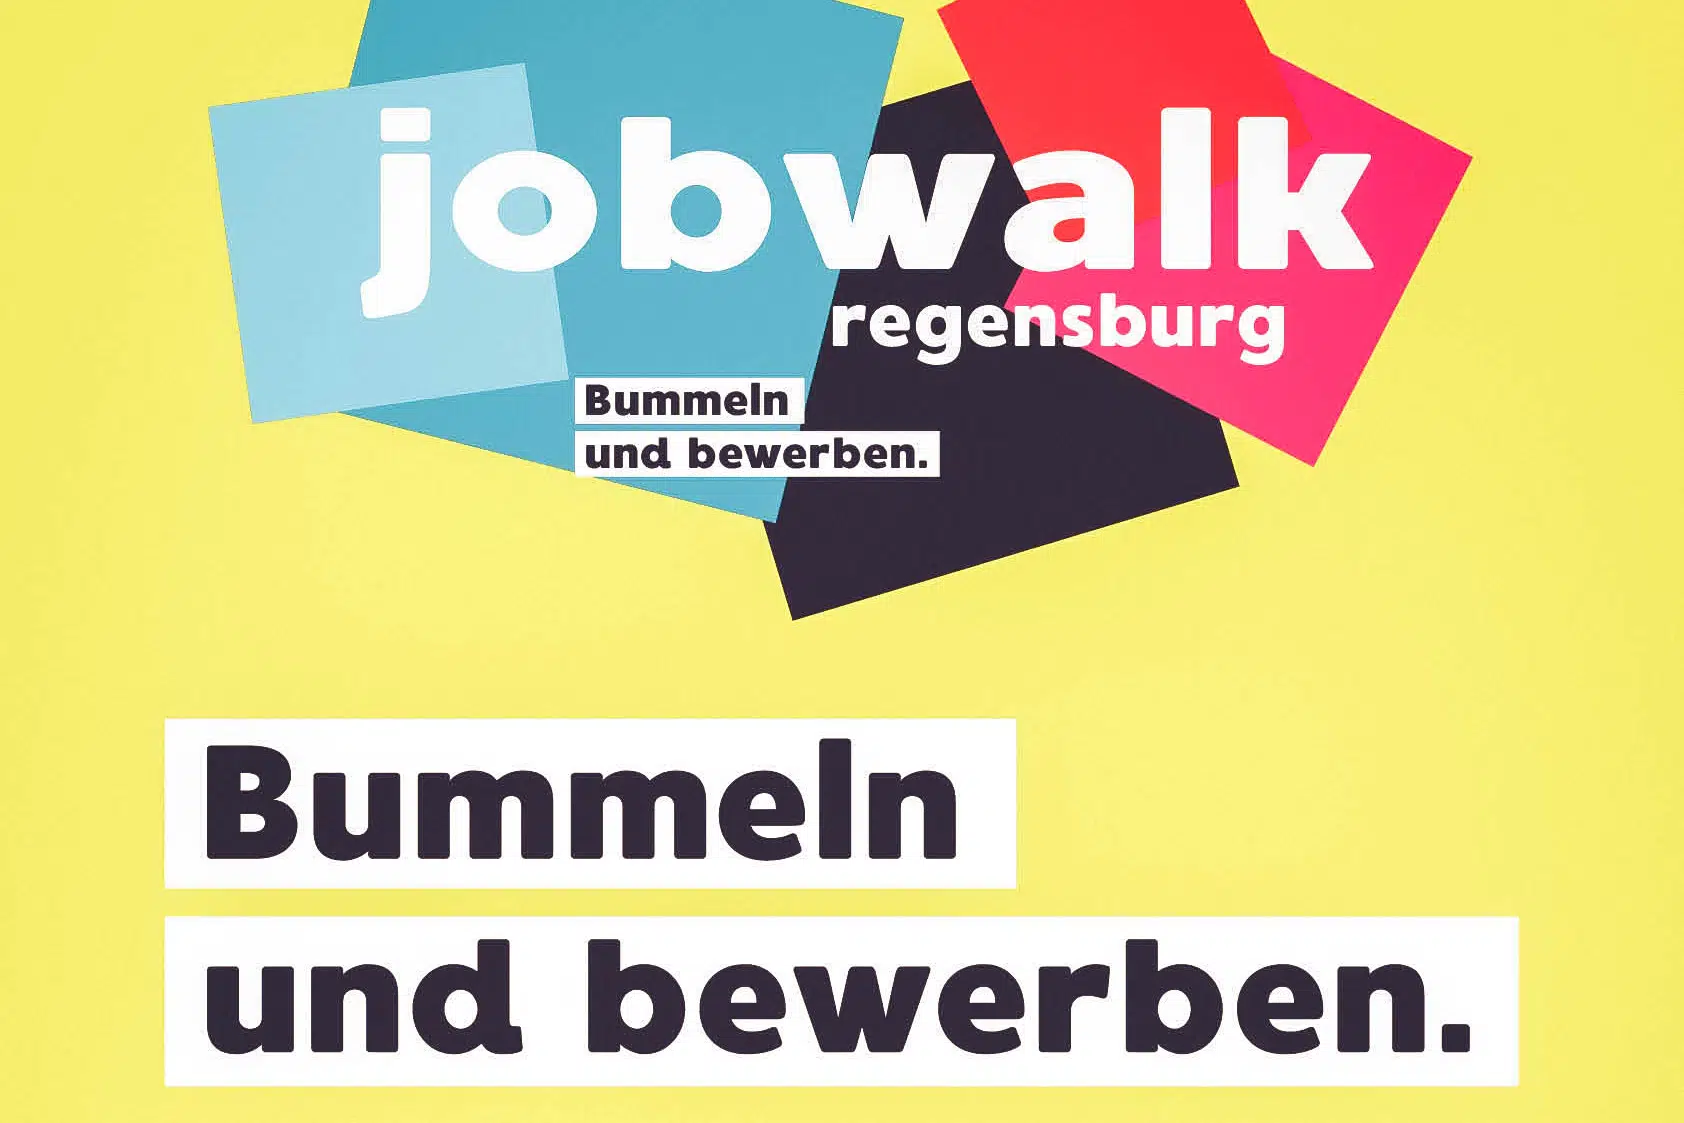 Jobwalk Regensburg